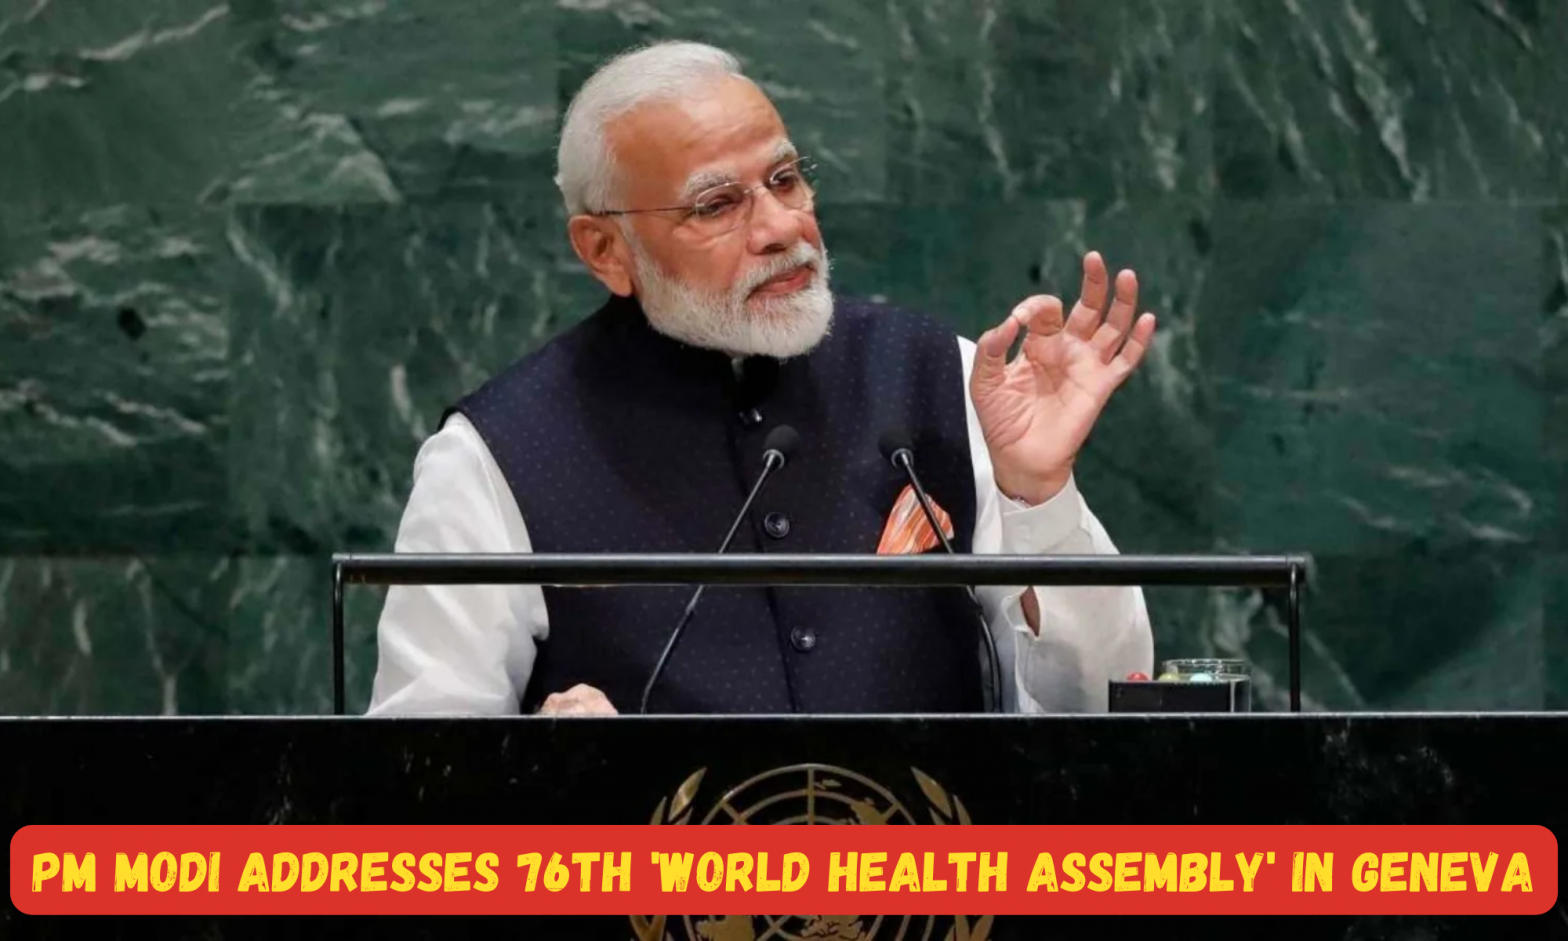 PM Modi addresses 76th 'World Health Assembly' in Geneva, Switzerland